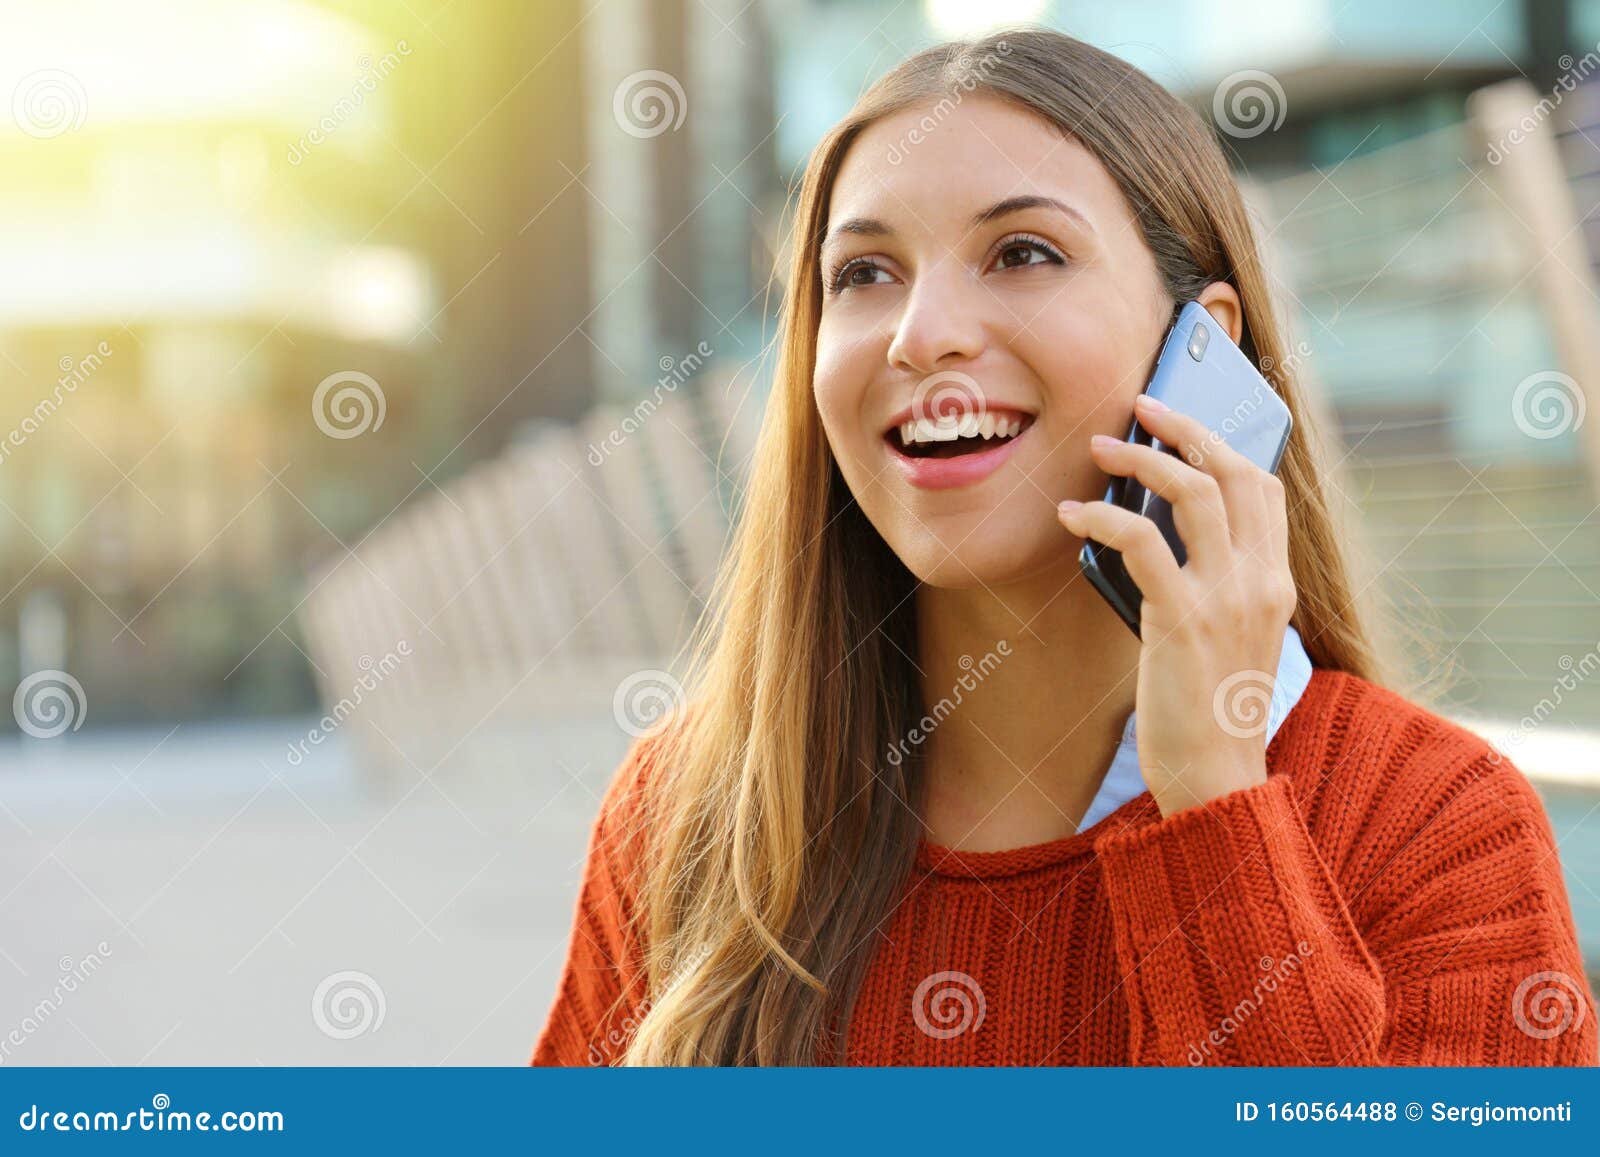 Жена разговаривает по телефону а ее. Девушка со смартфоном у уха. Девушка разговаривает по айфону. Девушка с телефоном около уха. Смартфон у уха радостная девушка.